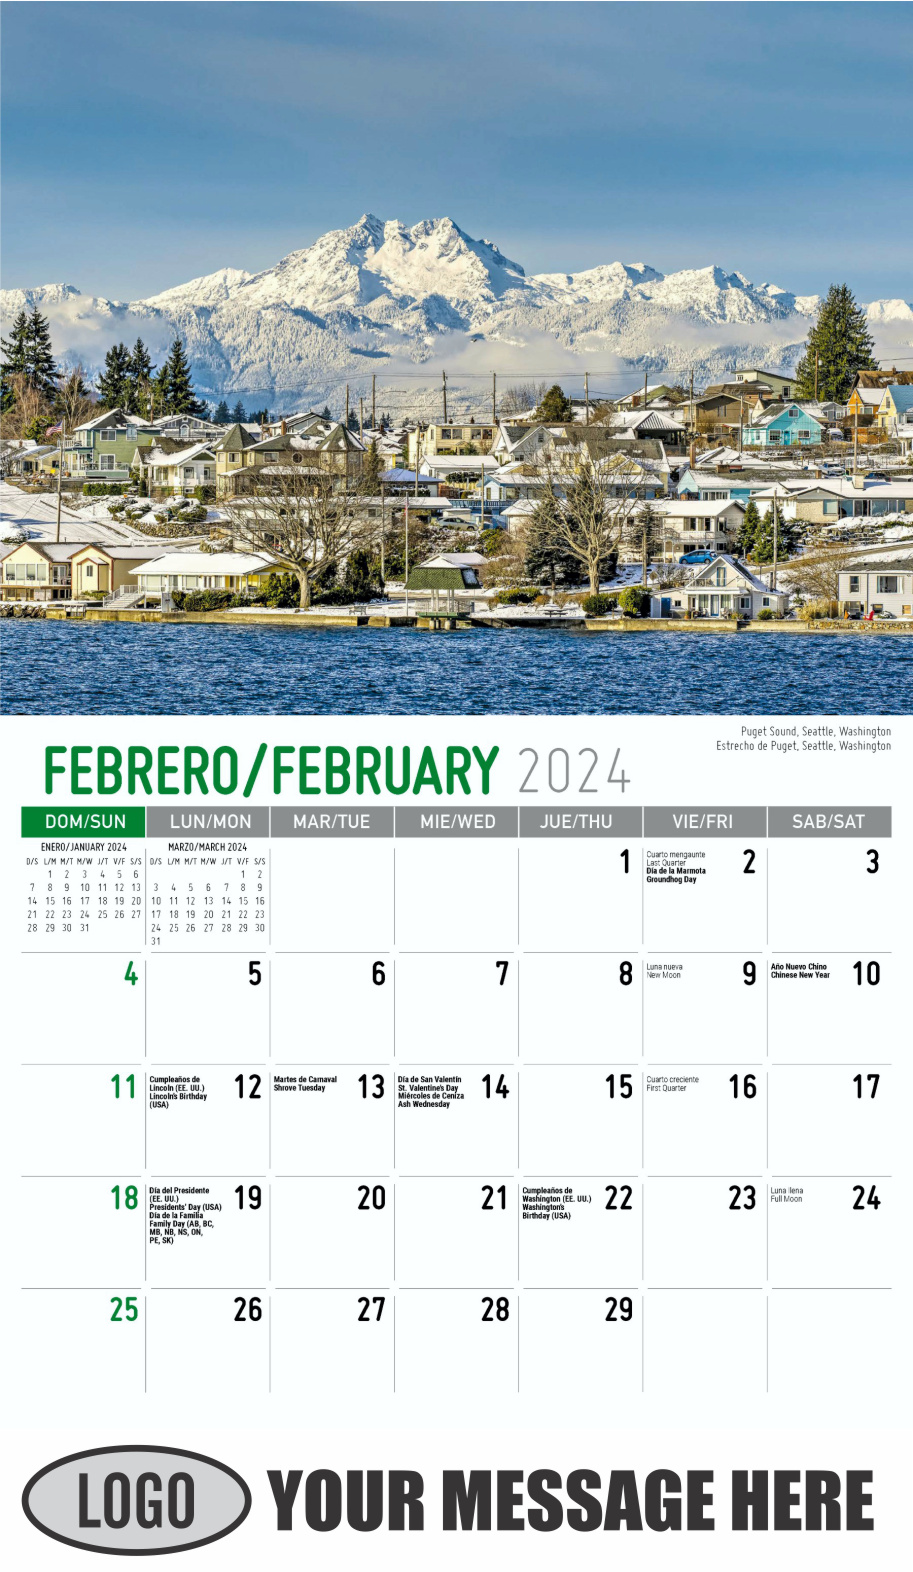 Scenes of America 2024 Bilingual Business Promo Calendar - February